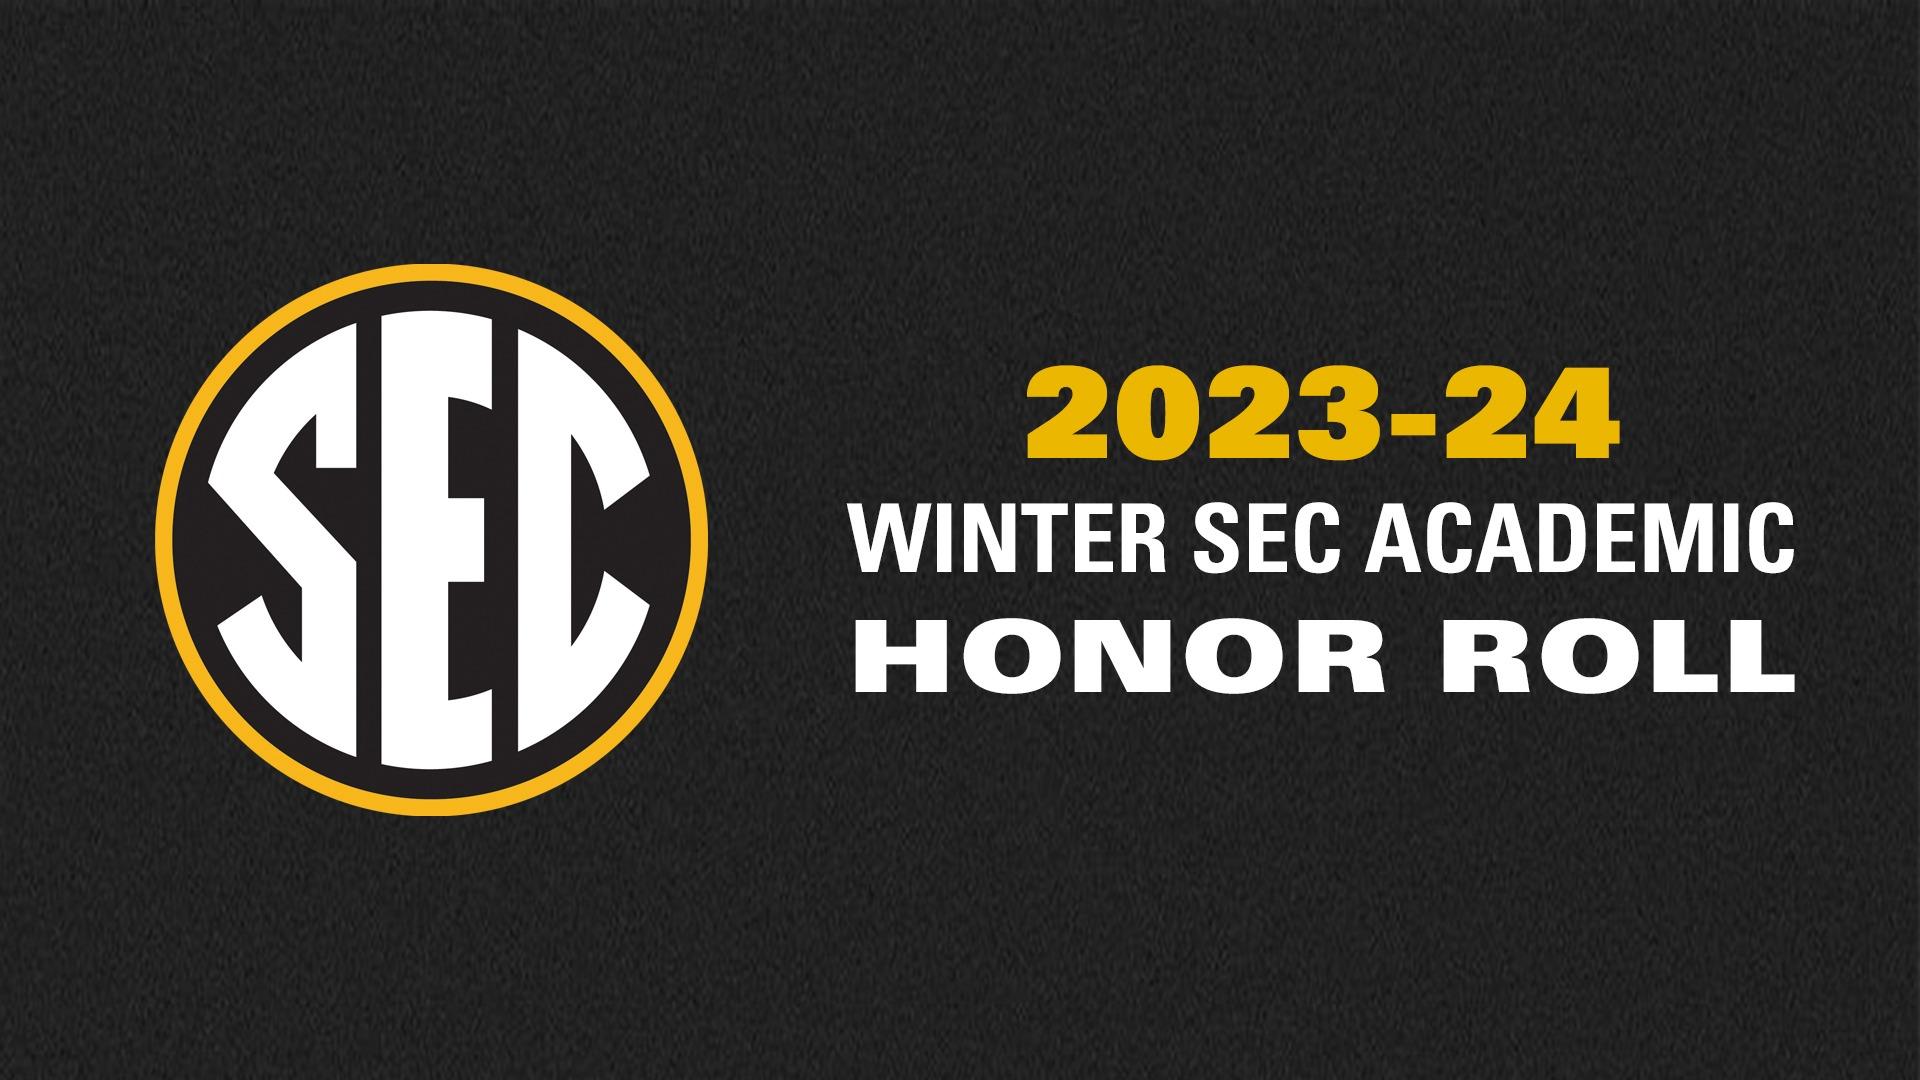 2023-24 Winter Academic Honor Roll